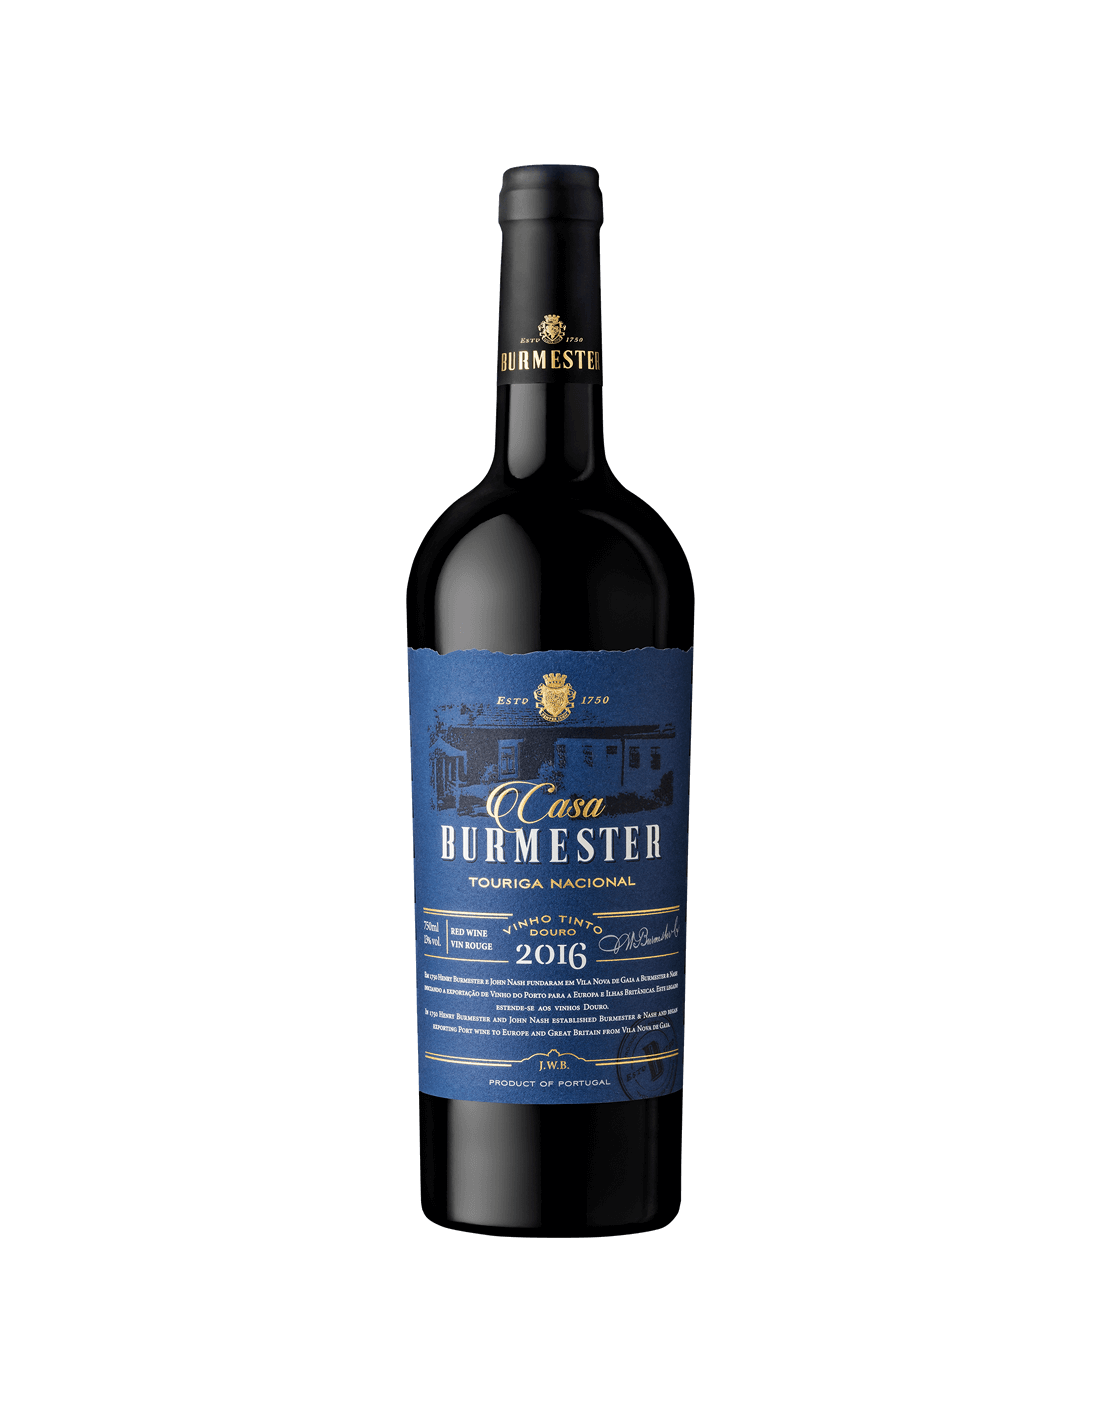 Vin rosu sec, Touriga Nacional, Casa Burmester Douro, 0.75L, 14.5% alc., Portugalia alcooldiscount.ro